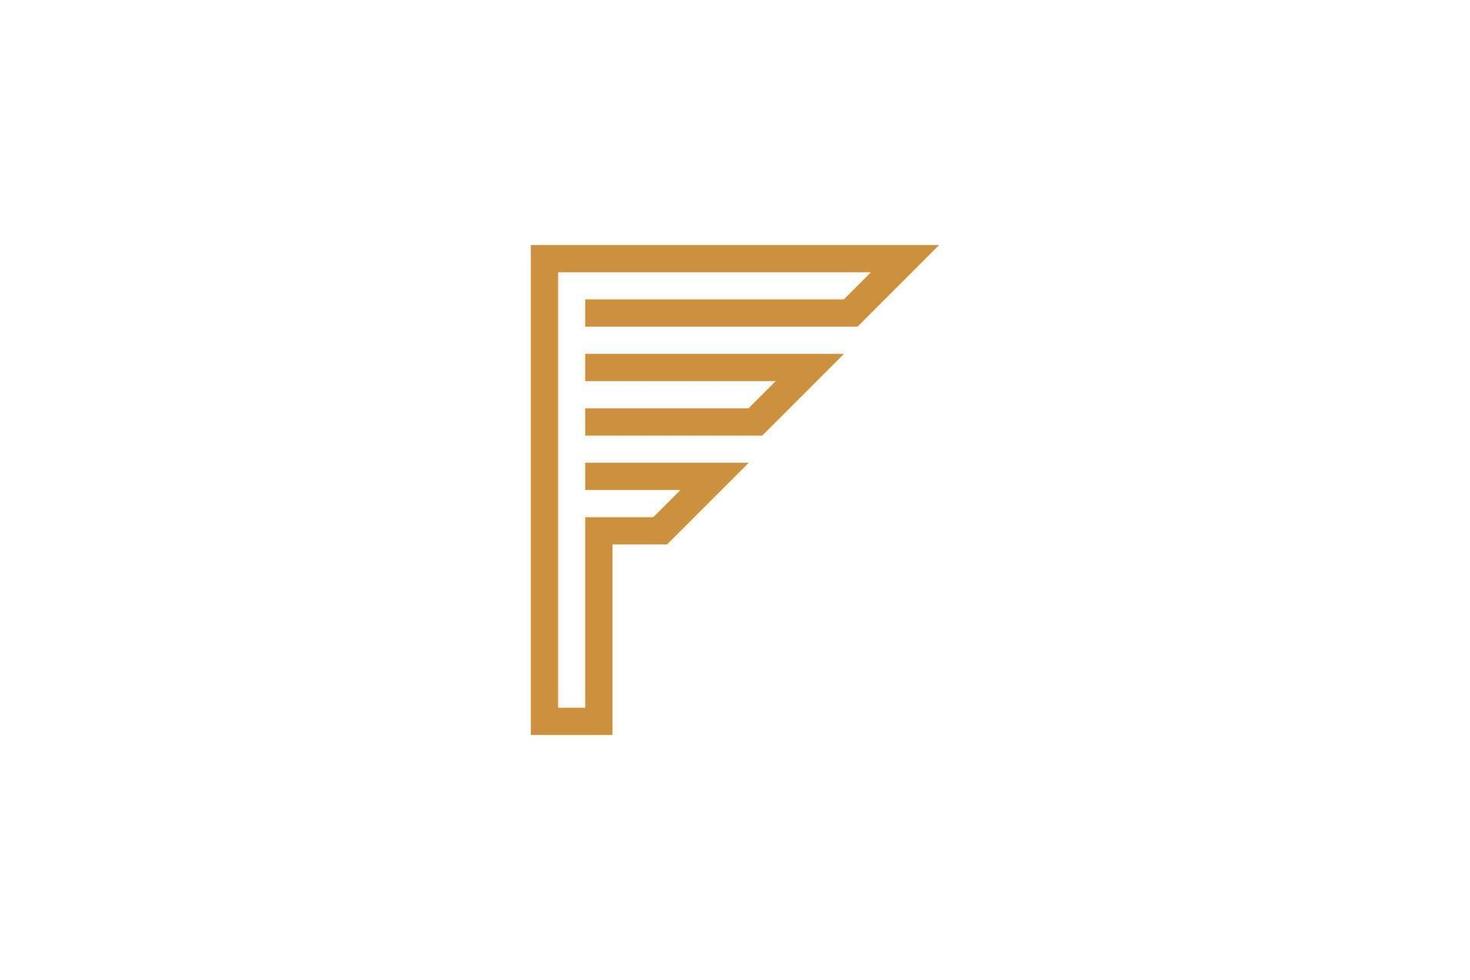 Flat Design Letter F Logo Template vector